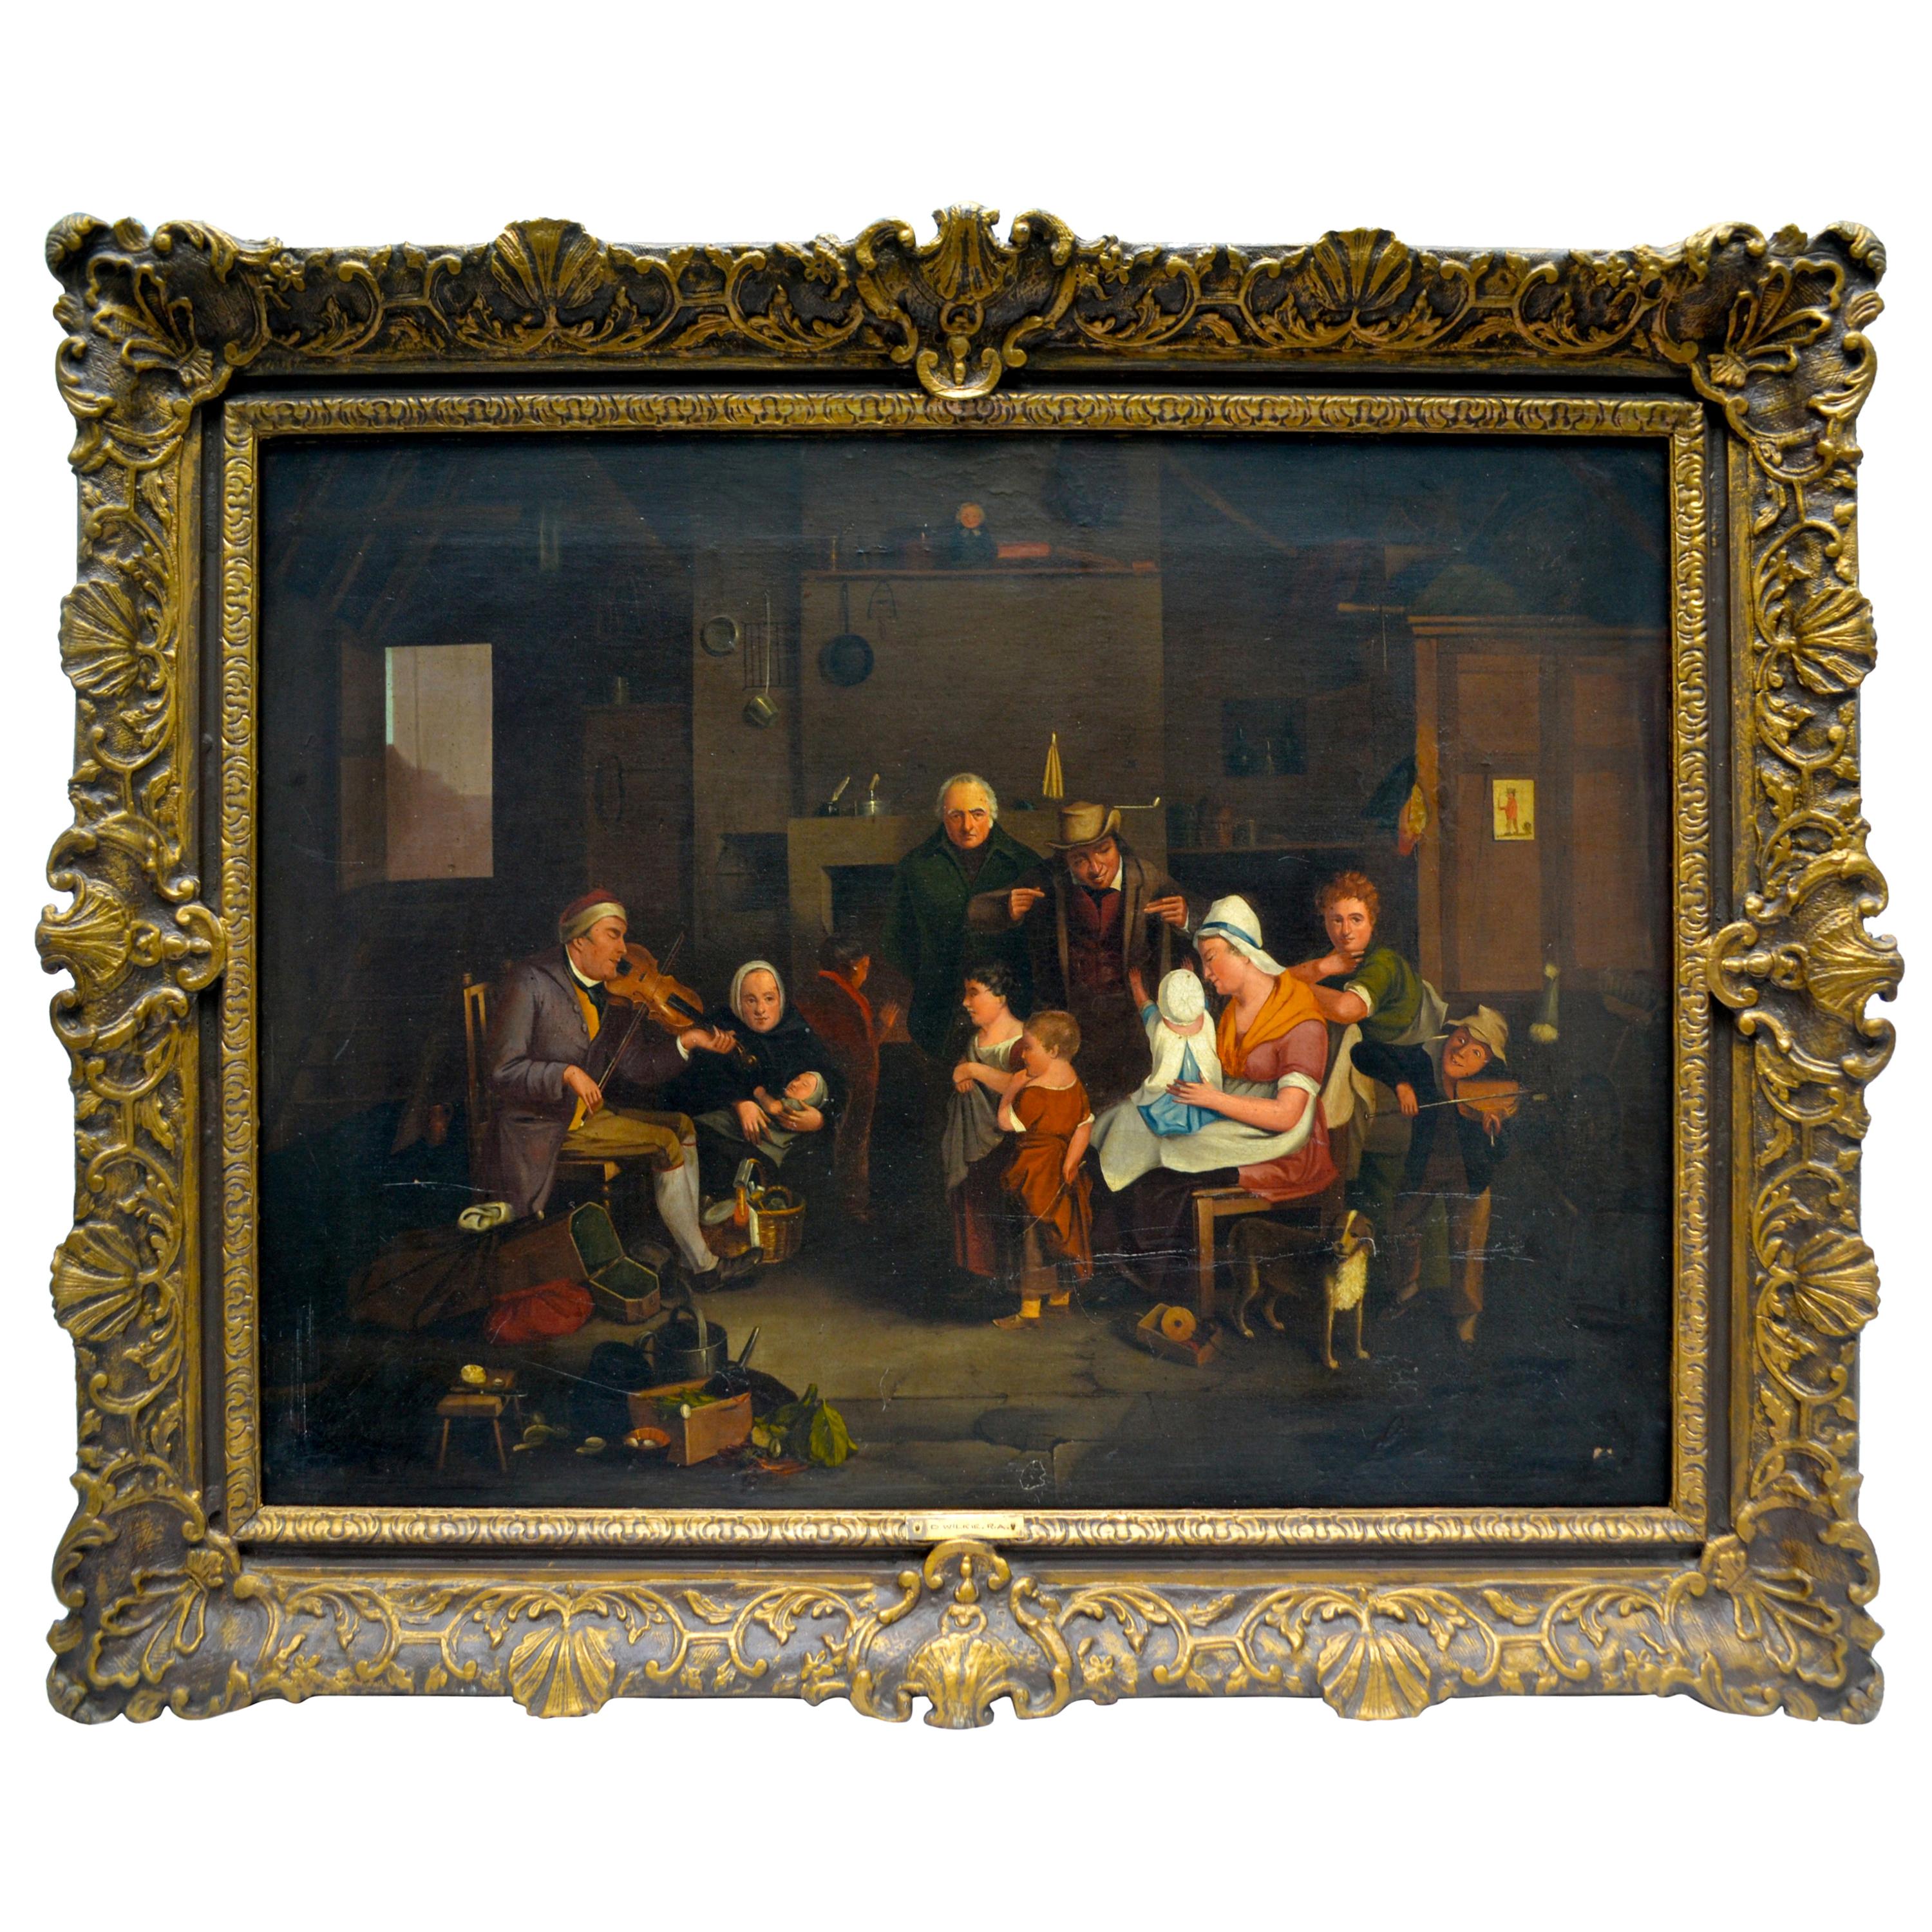 Rendition du 19e siècle du Blind Fiddler in the Tate de Sir David Wilkie